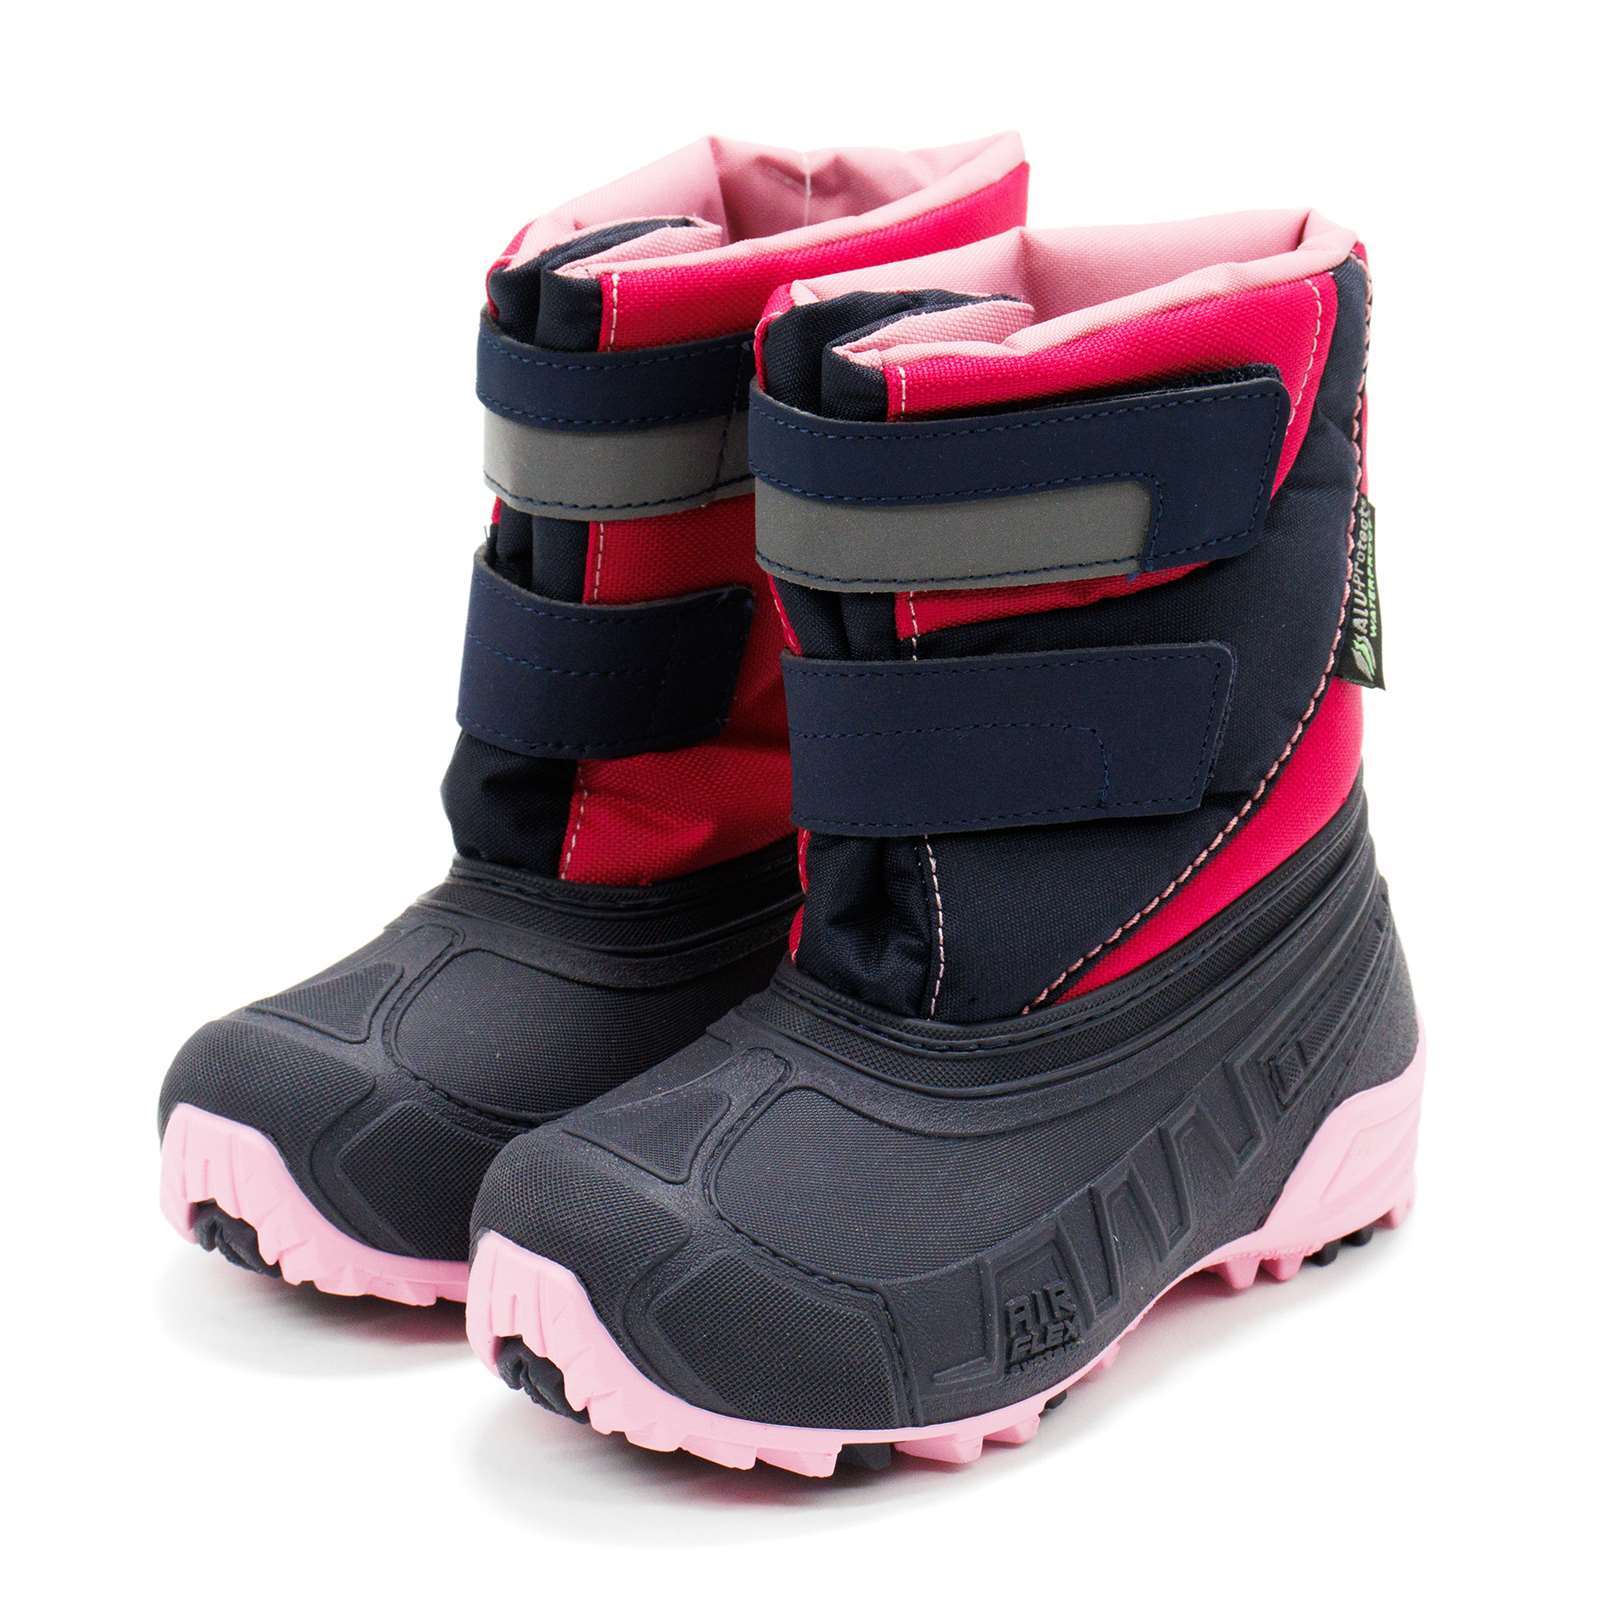 Boatilus Girl Hybrid02 Waterproof Boots